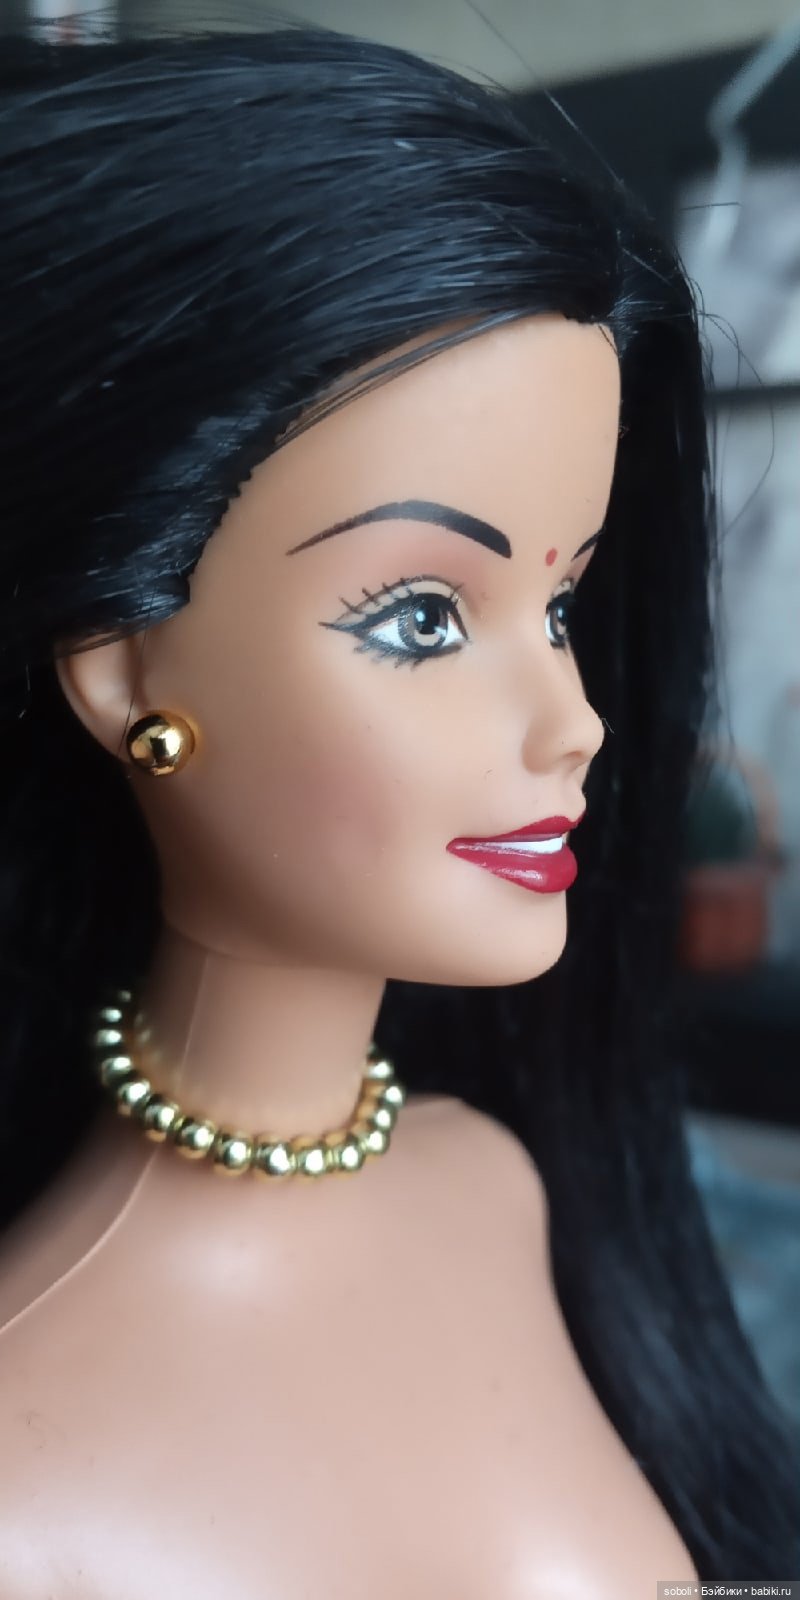 Ts carribean barbie - 🧡 Carribean Barbie: set 132954.